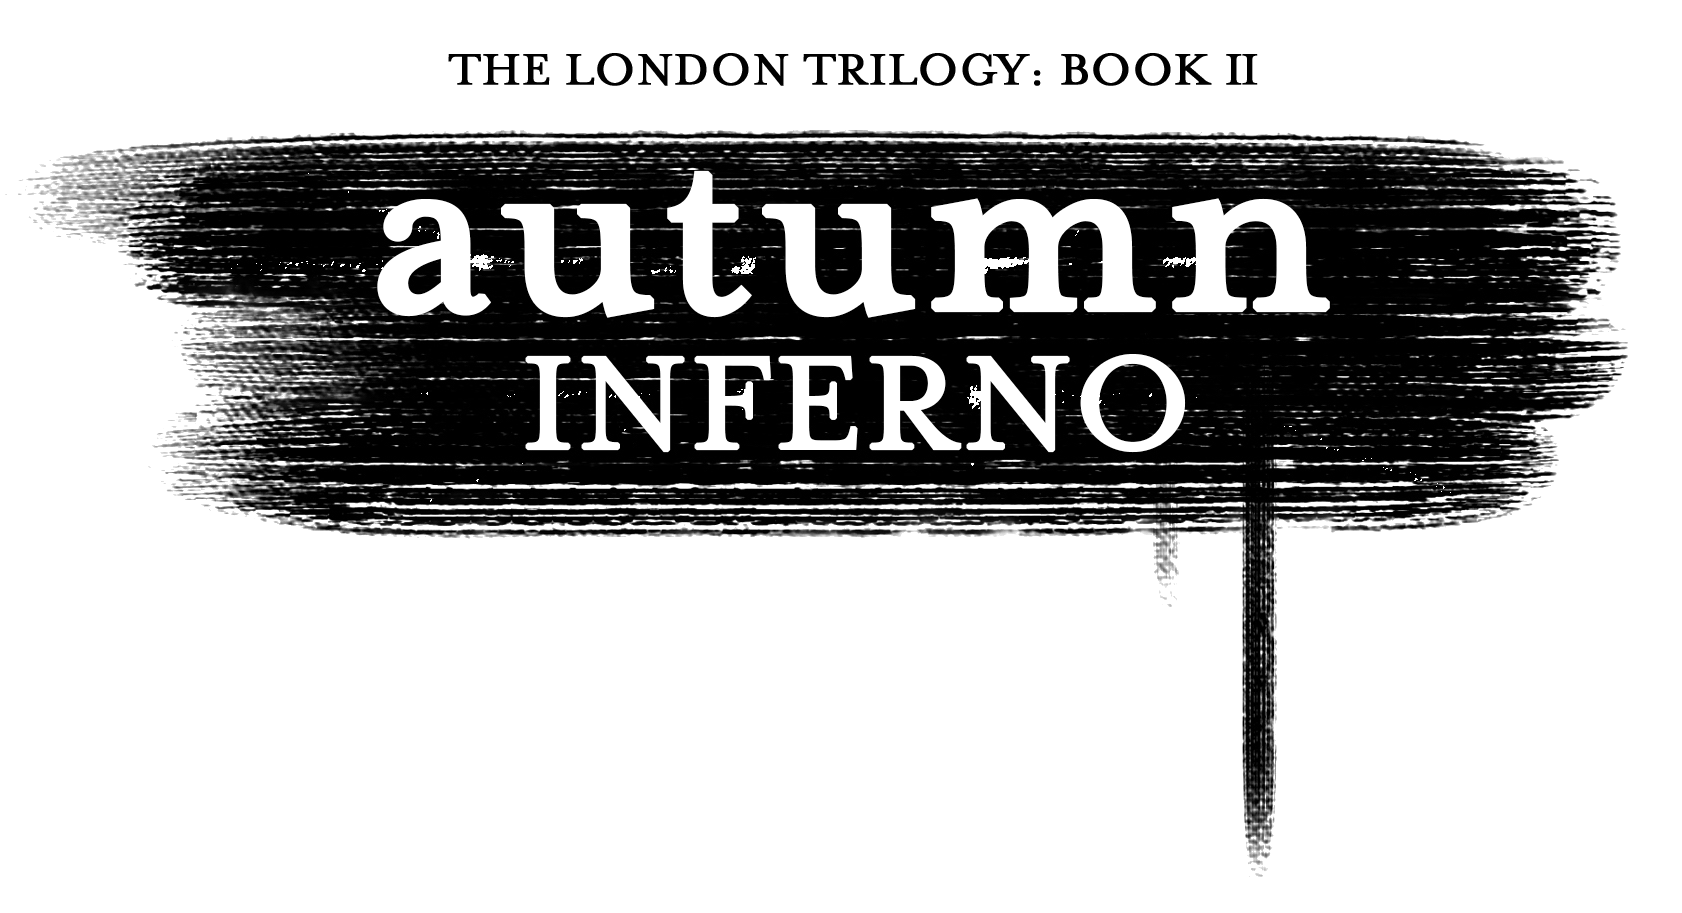 Autumn: Inferno by David Moody